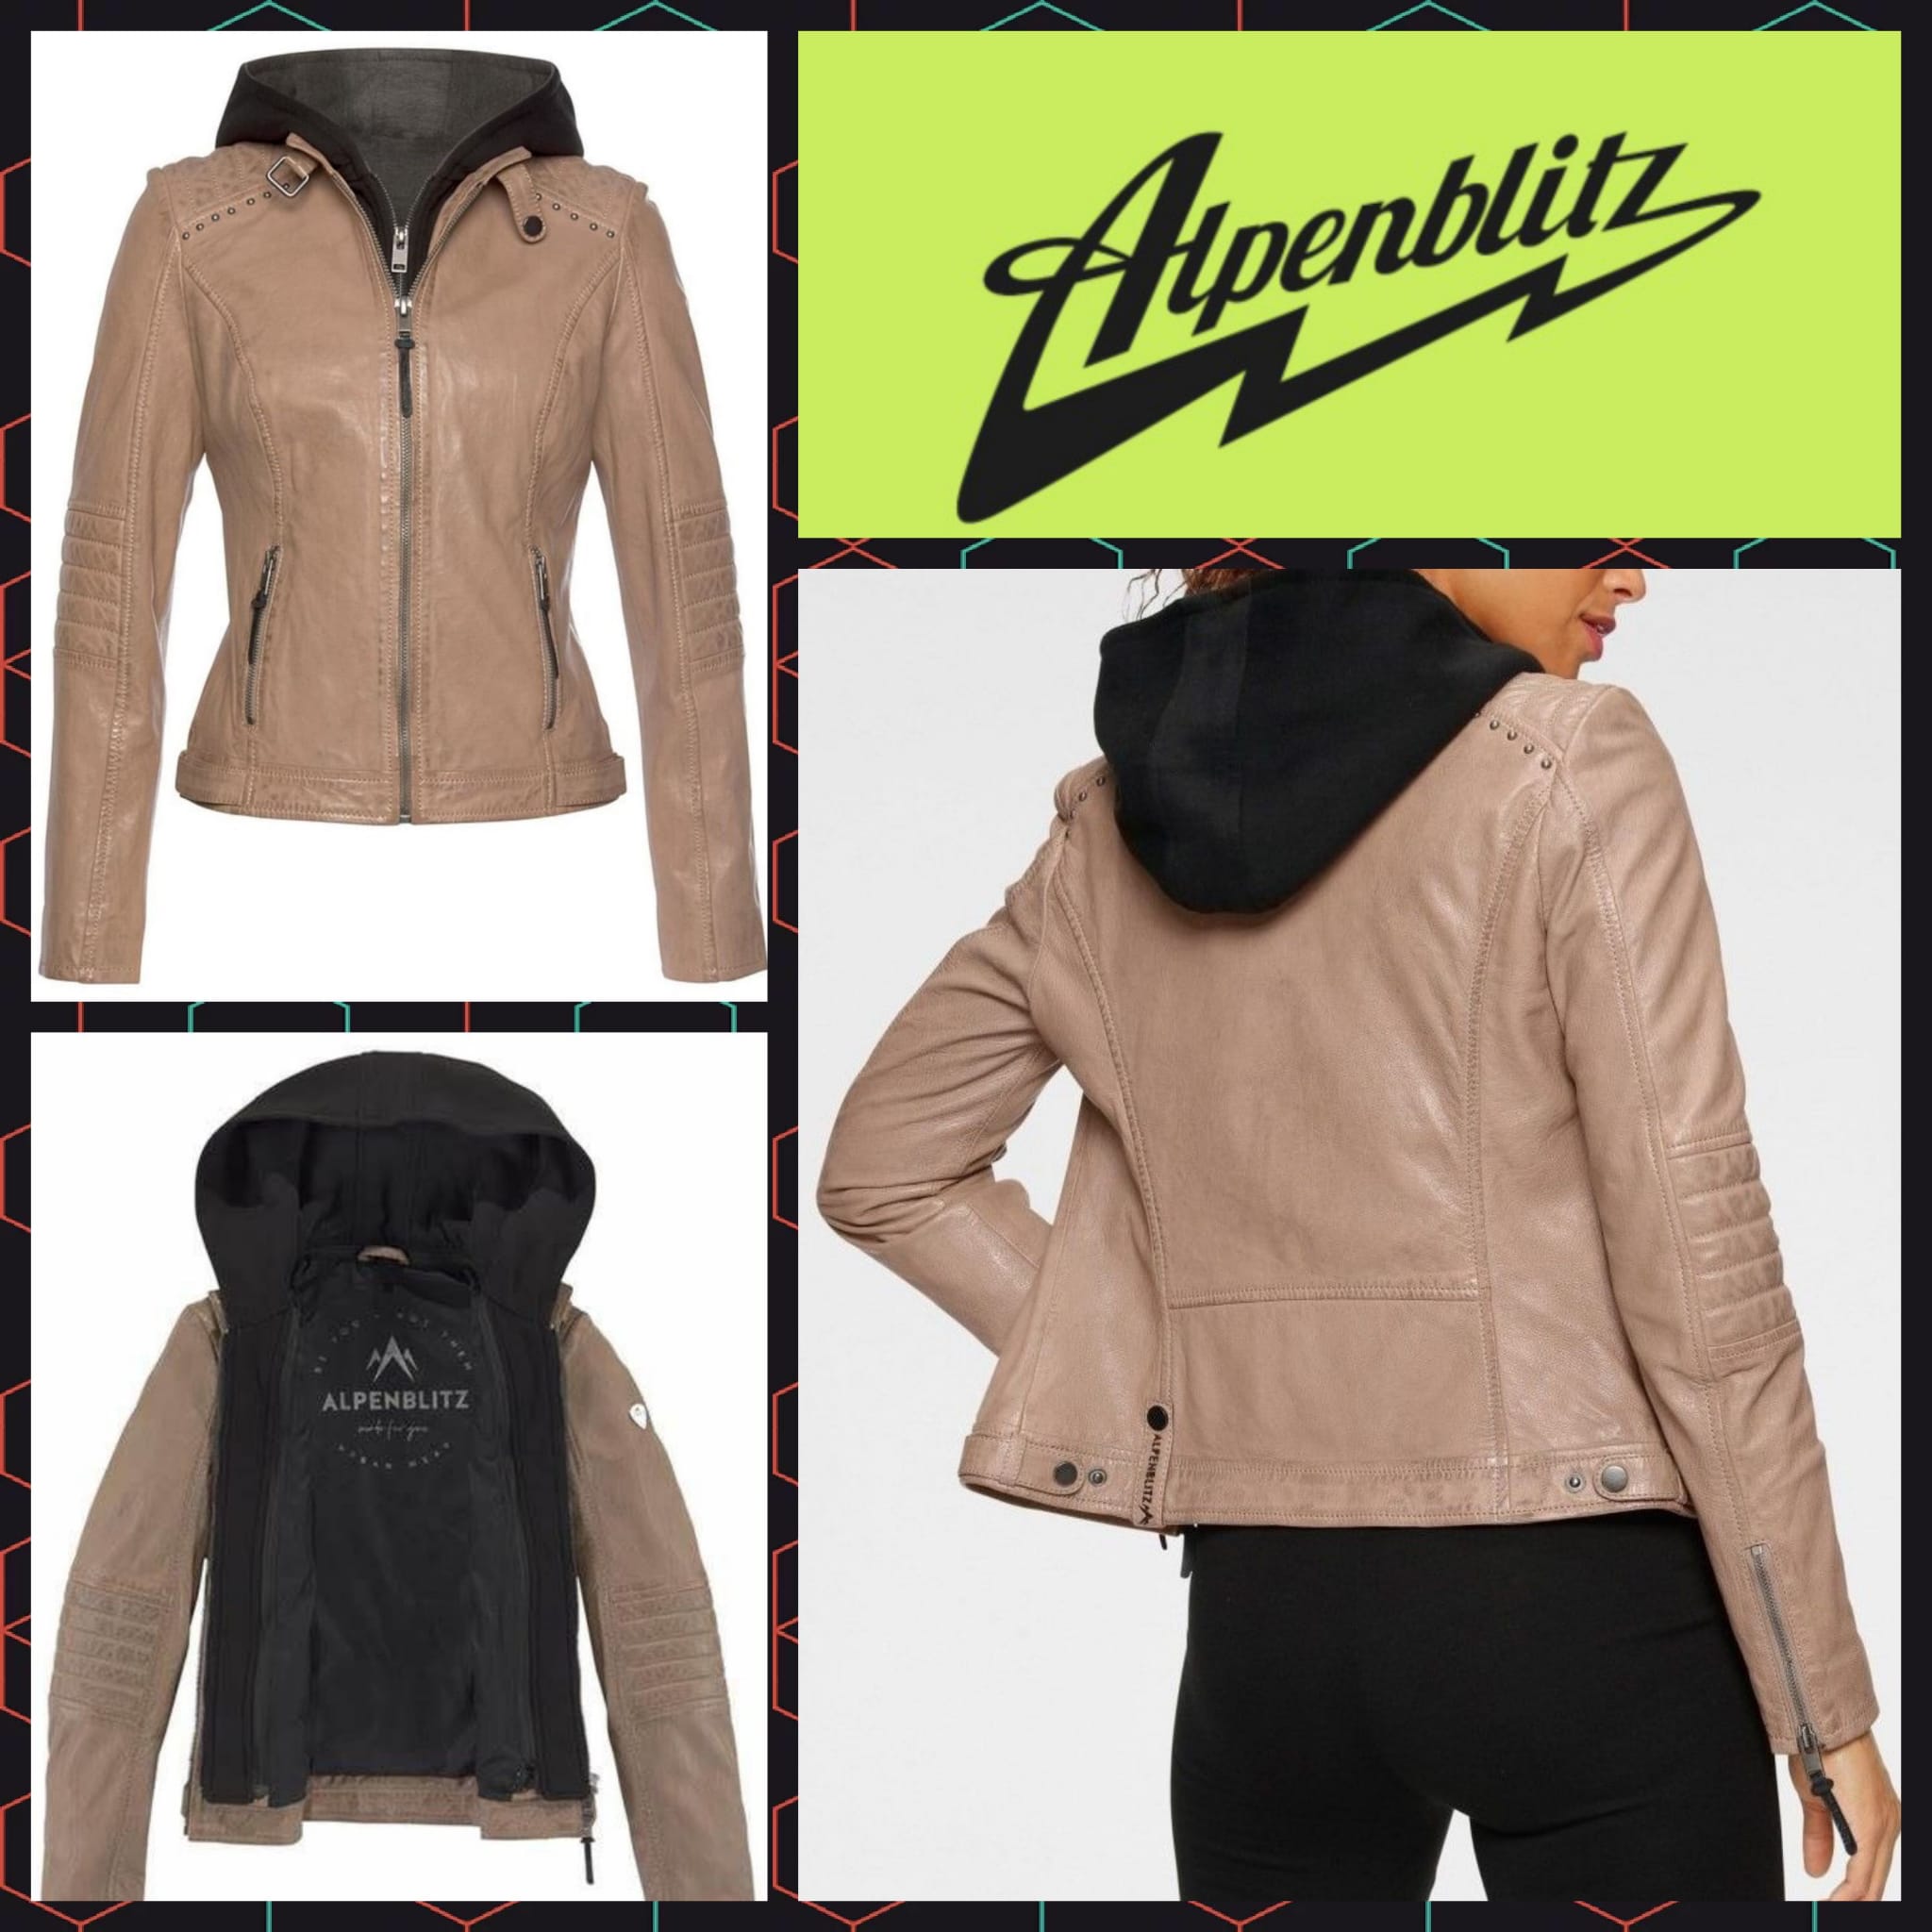 Women's beige Alpenblitz leather jacket